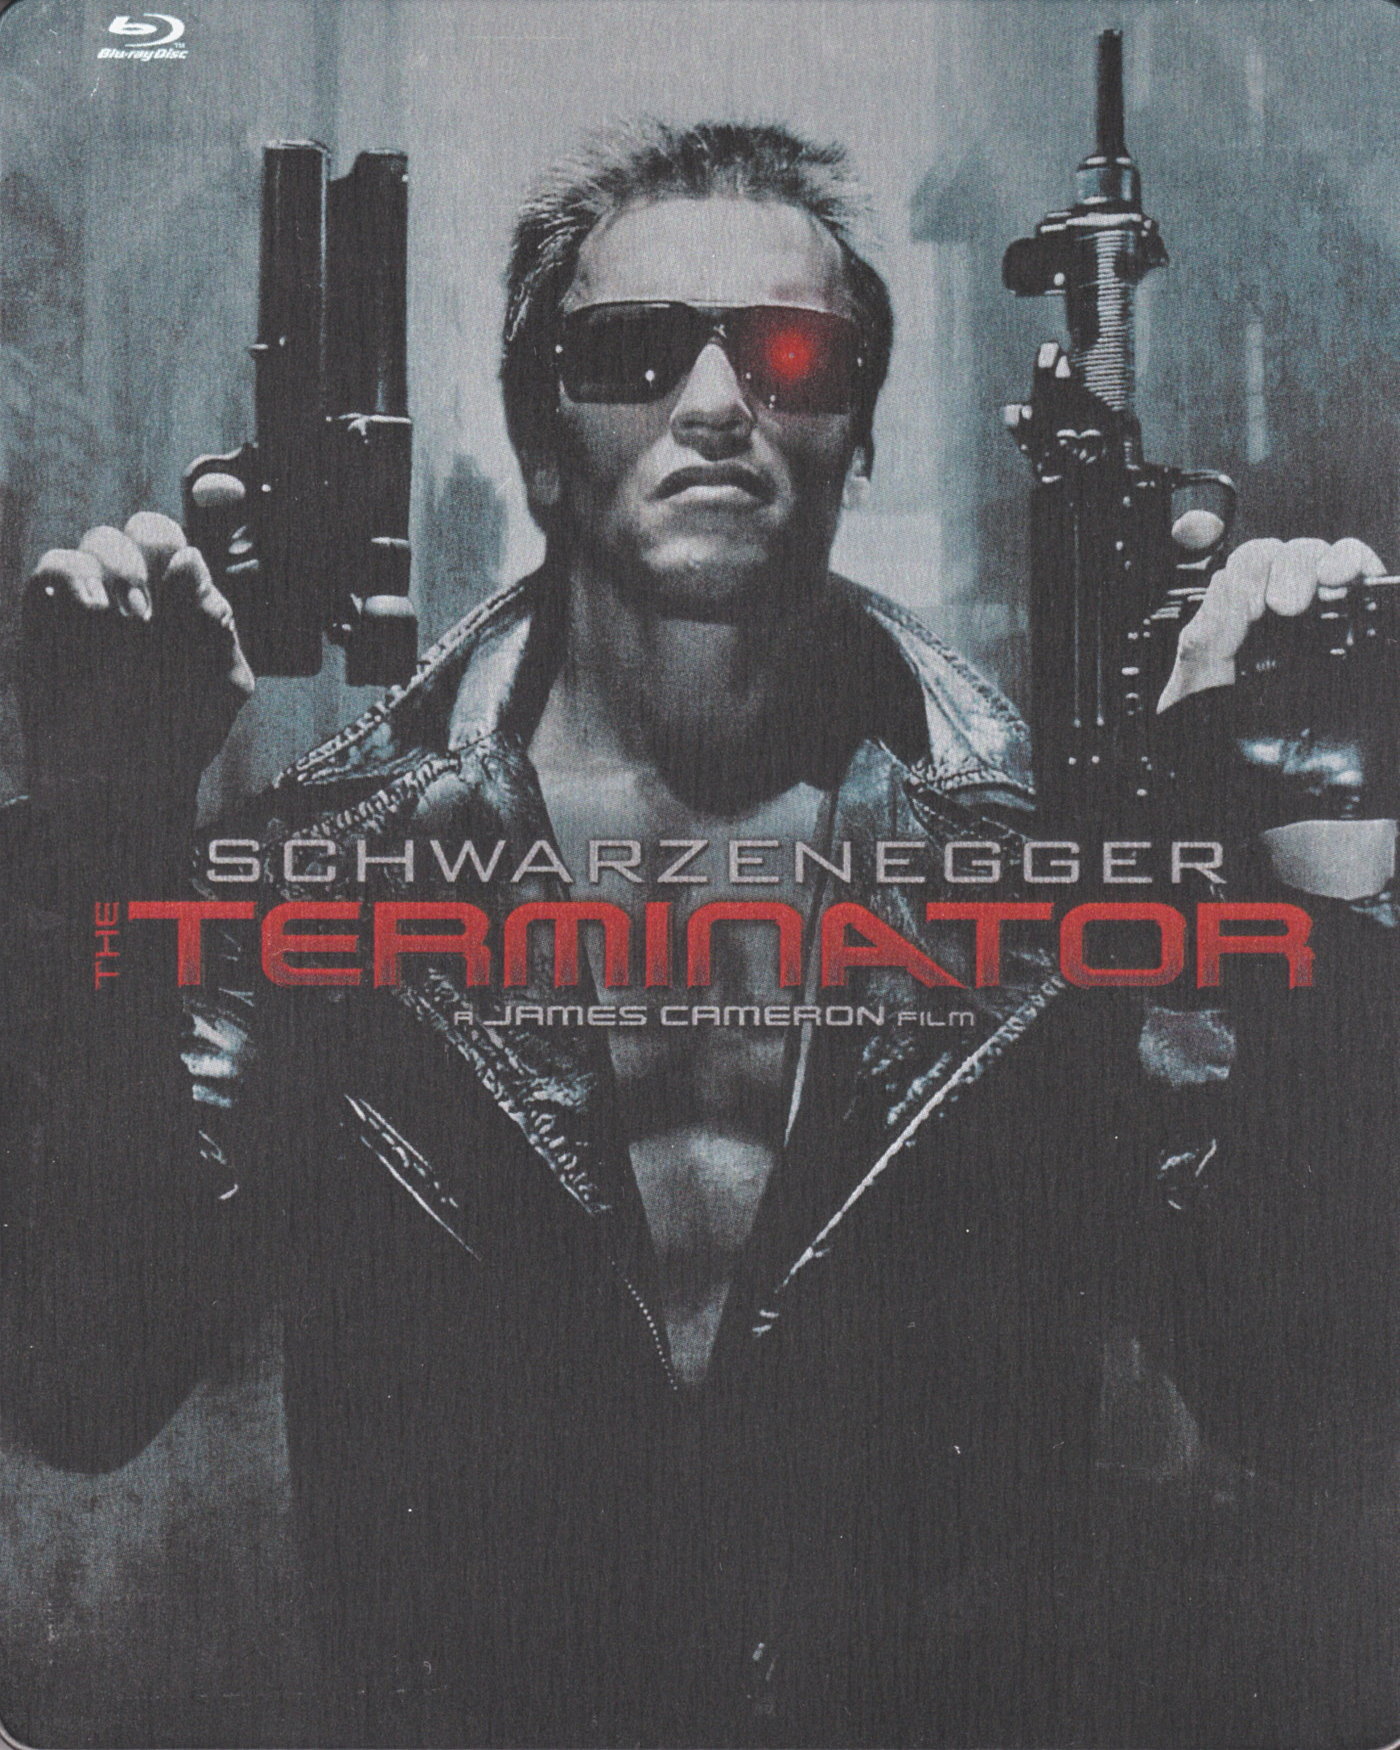 Cover - Terminator.jpg